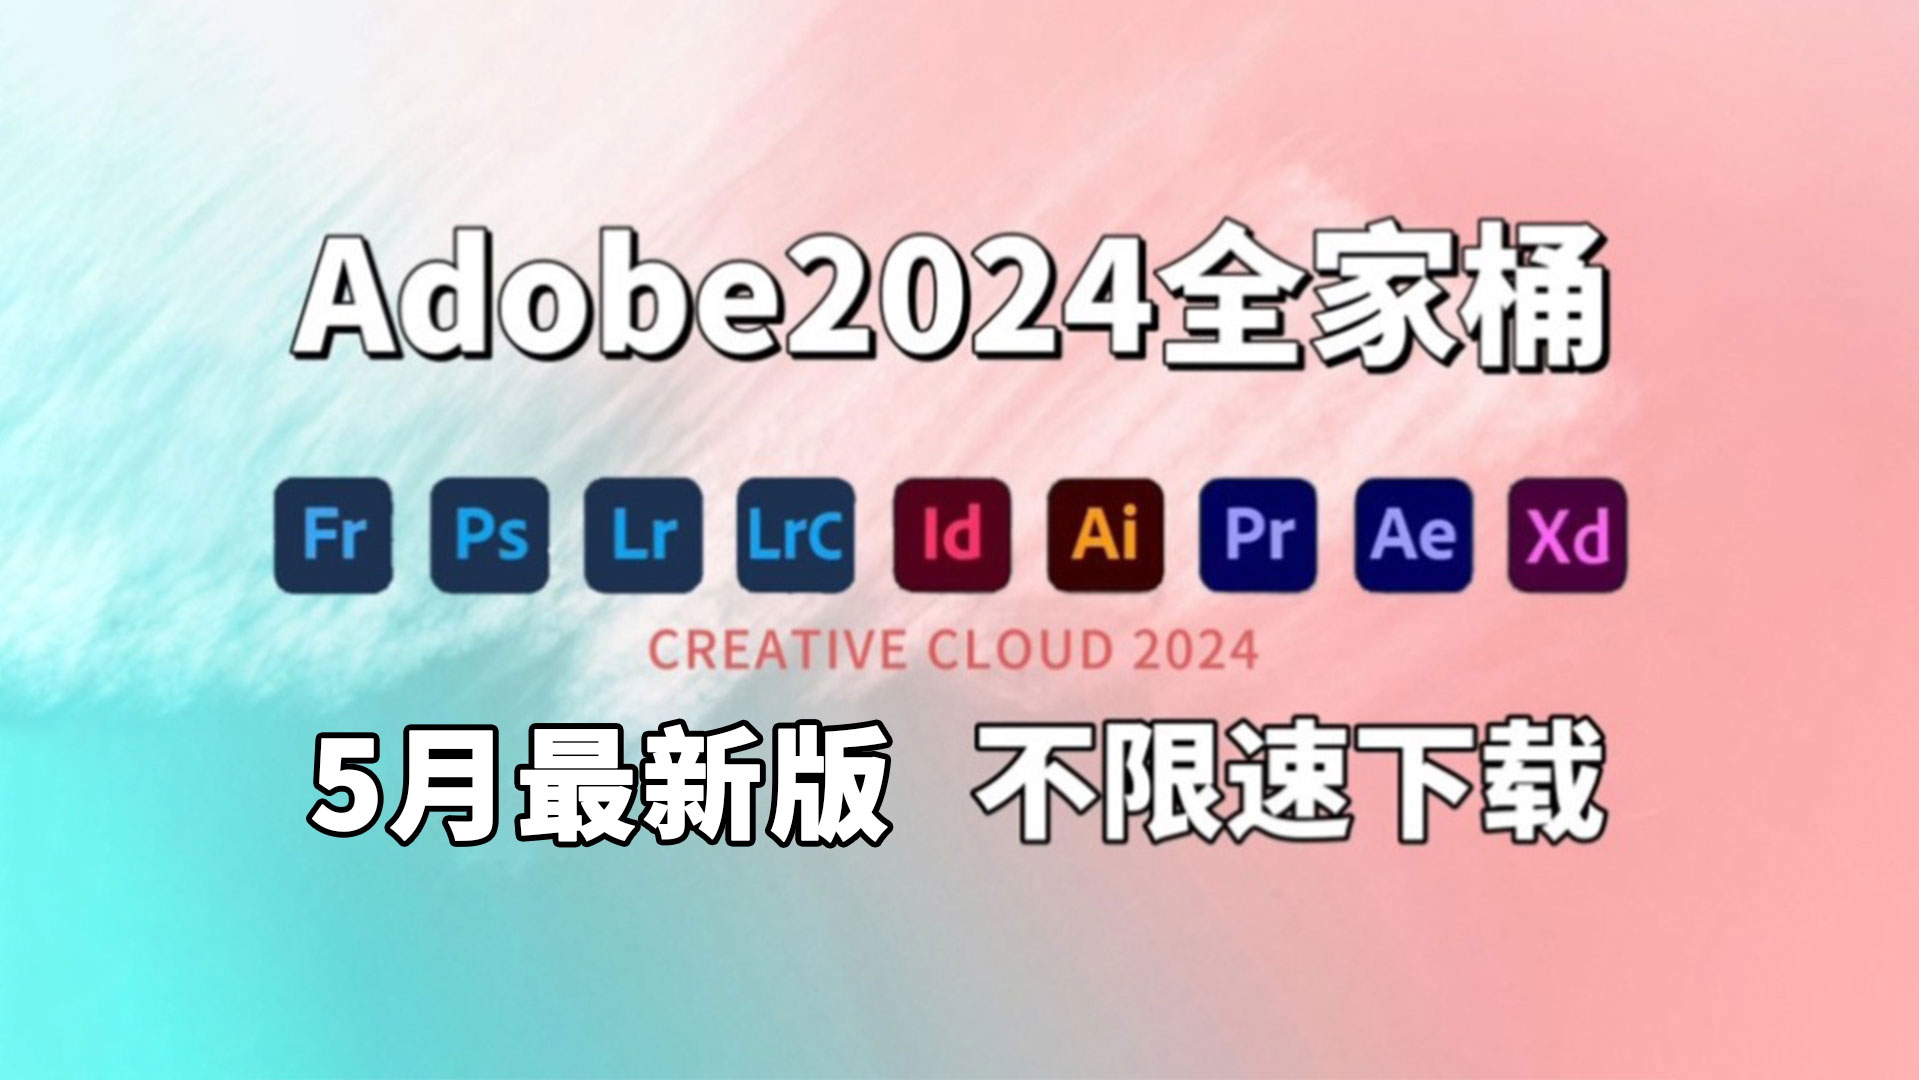 【Adobe全家桶2024】5月最新版本免费下载（附安装包）PR AE AI PS 等！一键安装、不限速下载！支持win+mac！最强白嫖系列！永久使用！